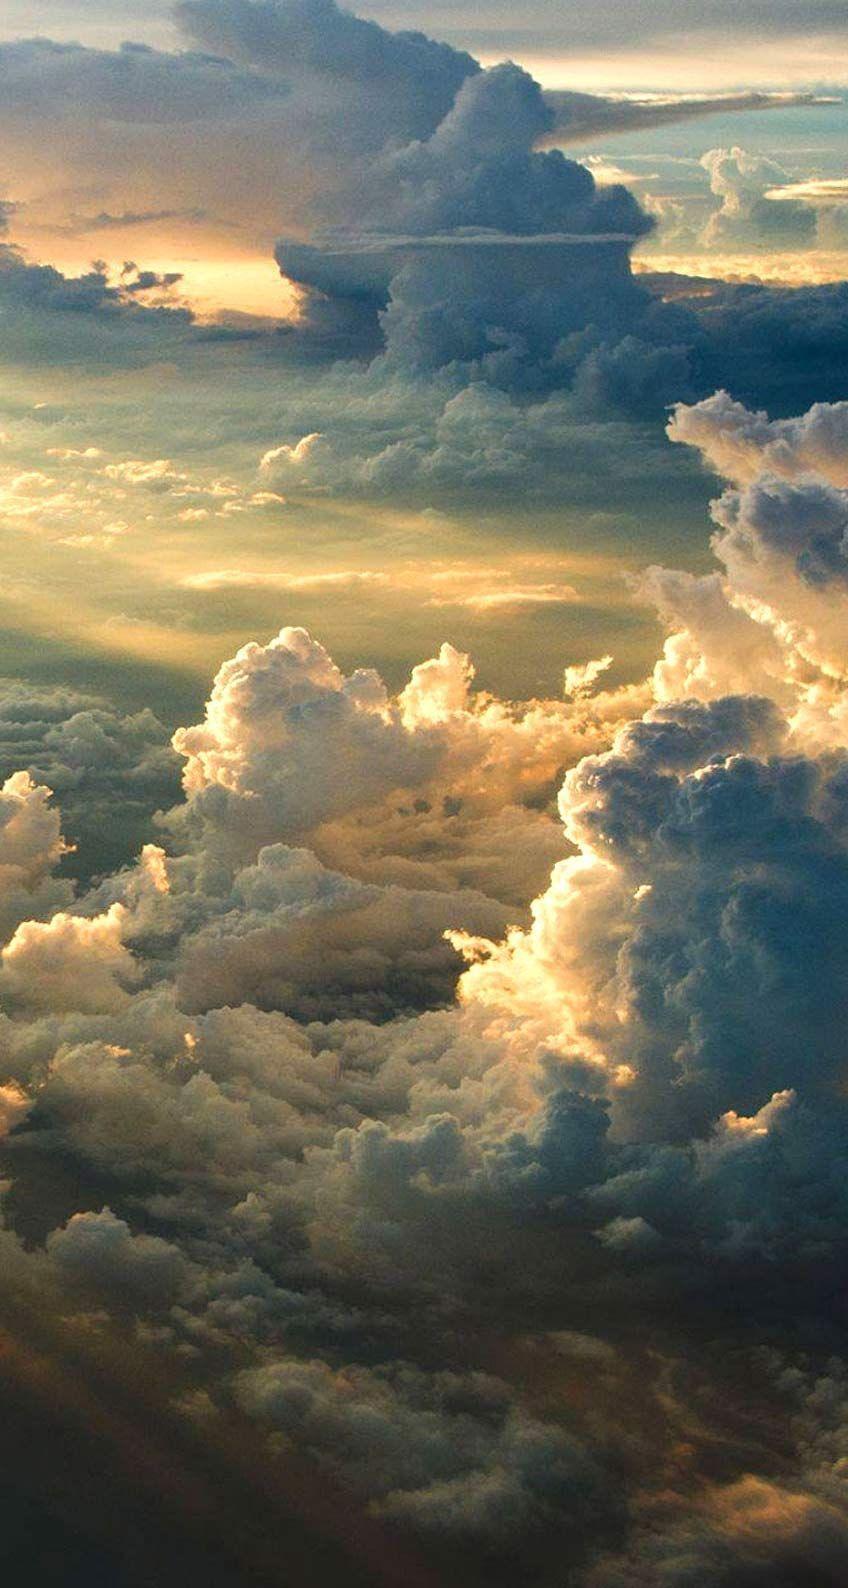 iPhone wallpaper. Clouds, Sky, Nature